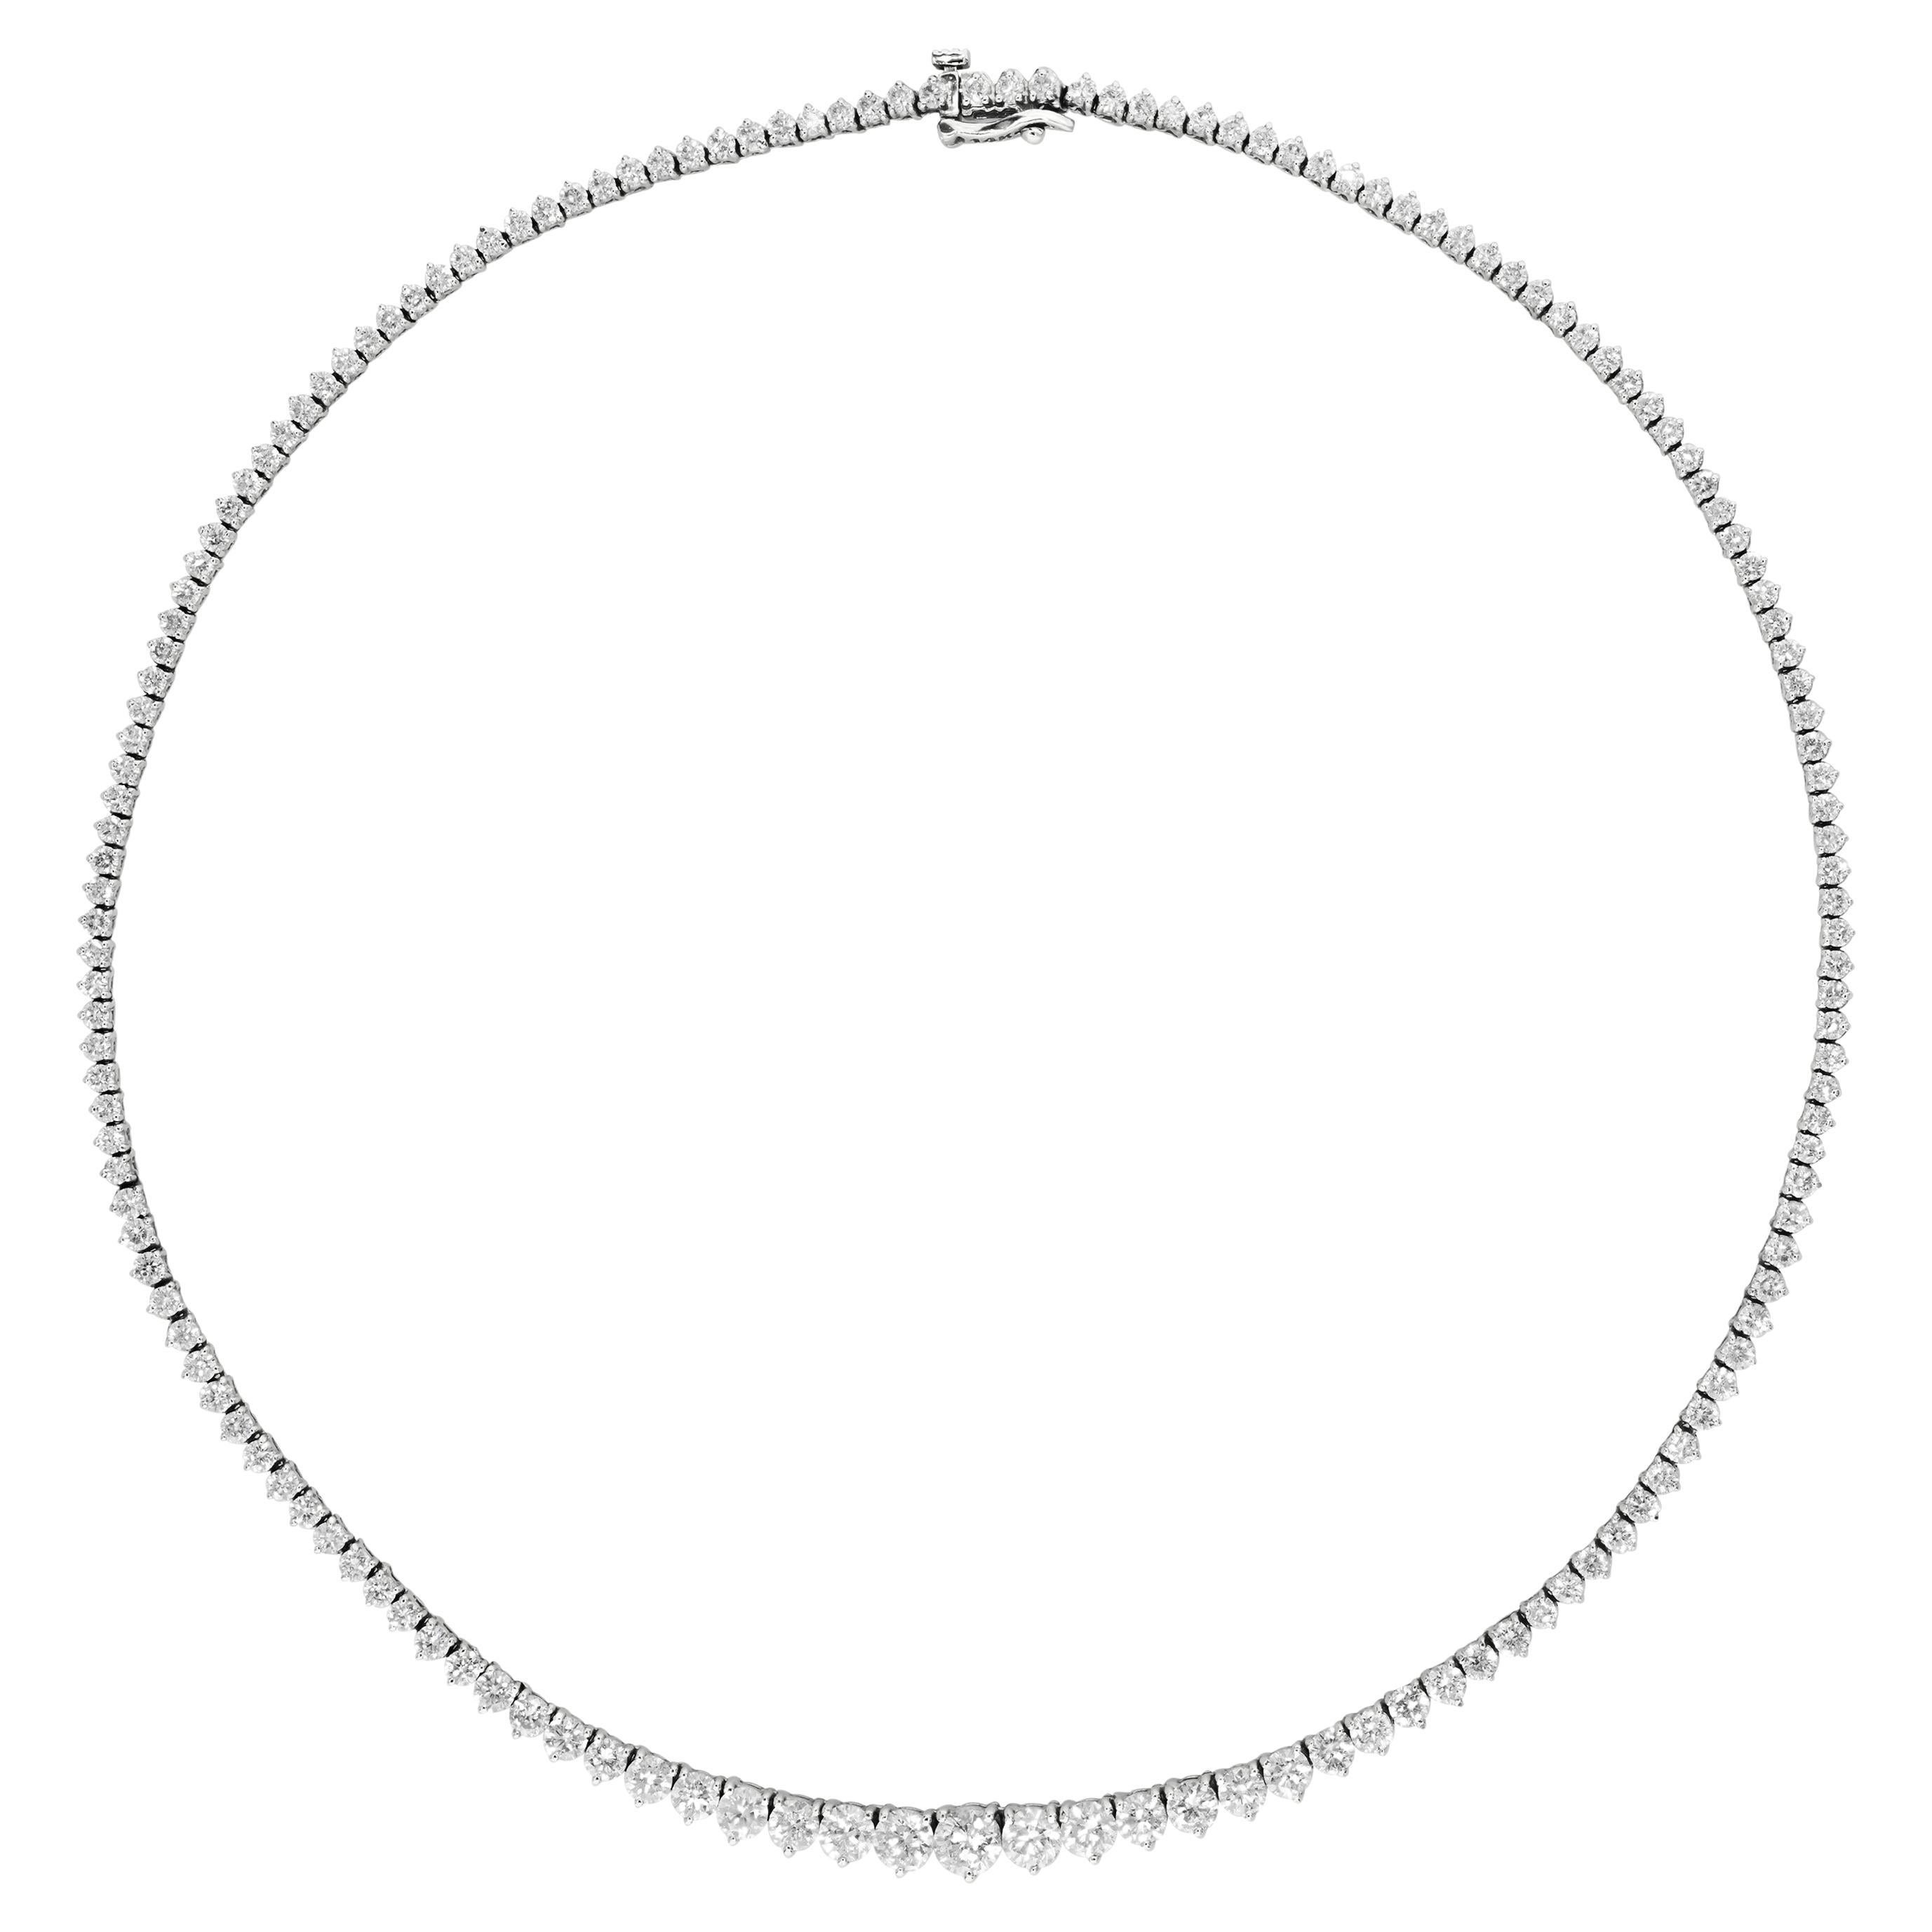 5.34 Carat Graduated Round Diamond Necklace in 14k White Gold ref103